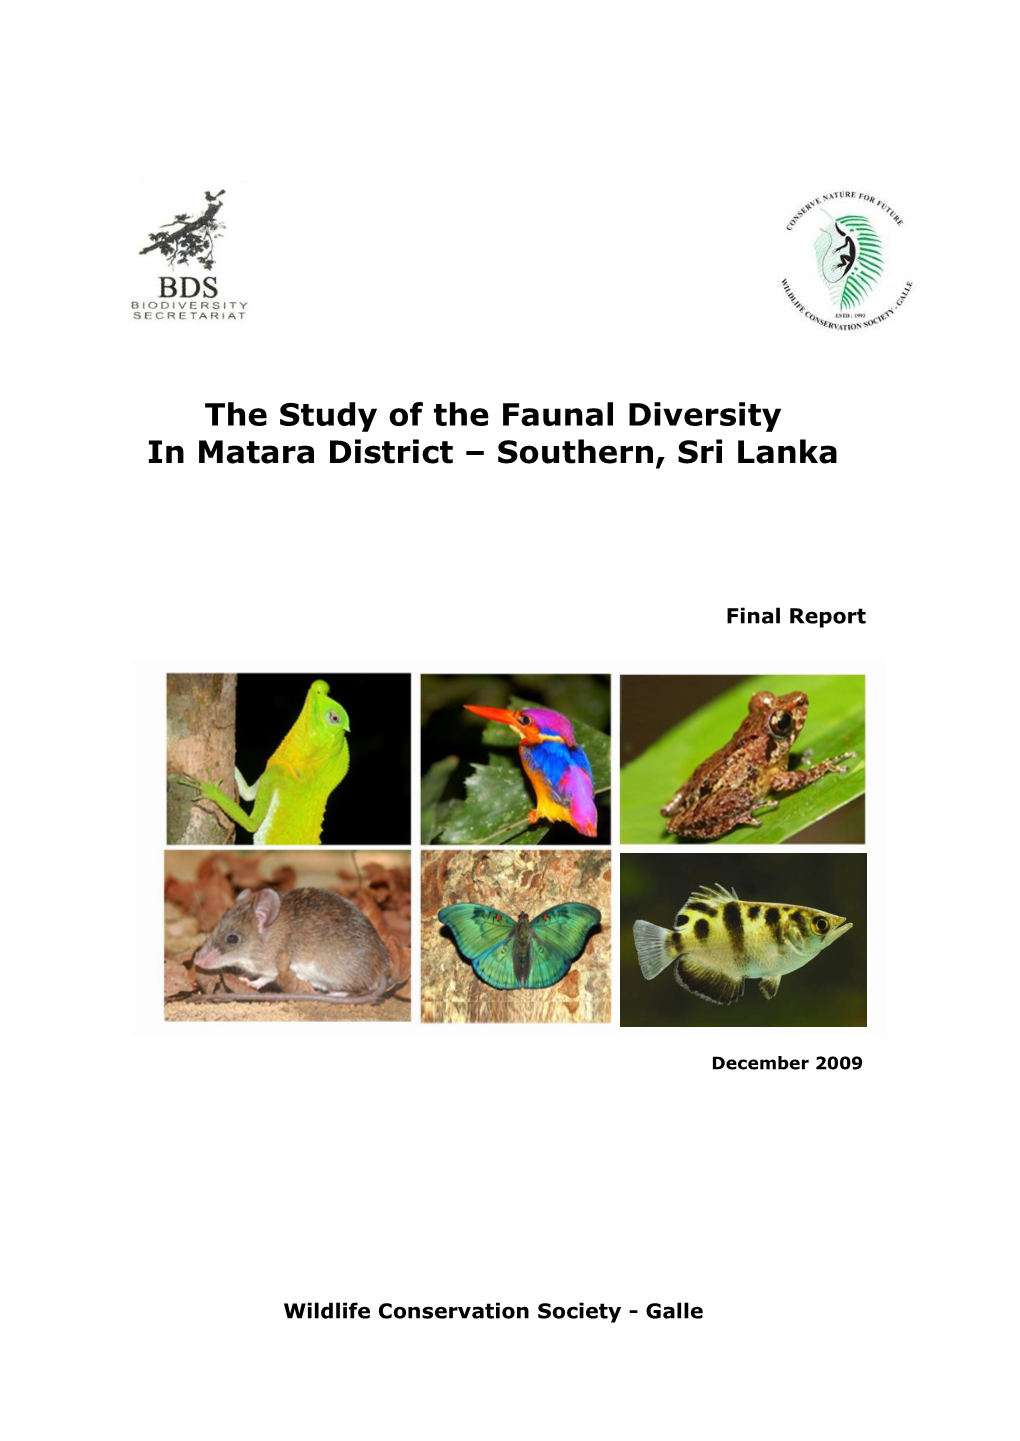 The Study of the Faunal Diversity in Matara District – Southern, Sri Lanka